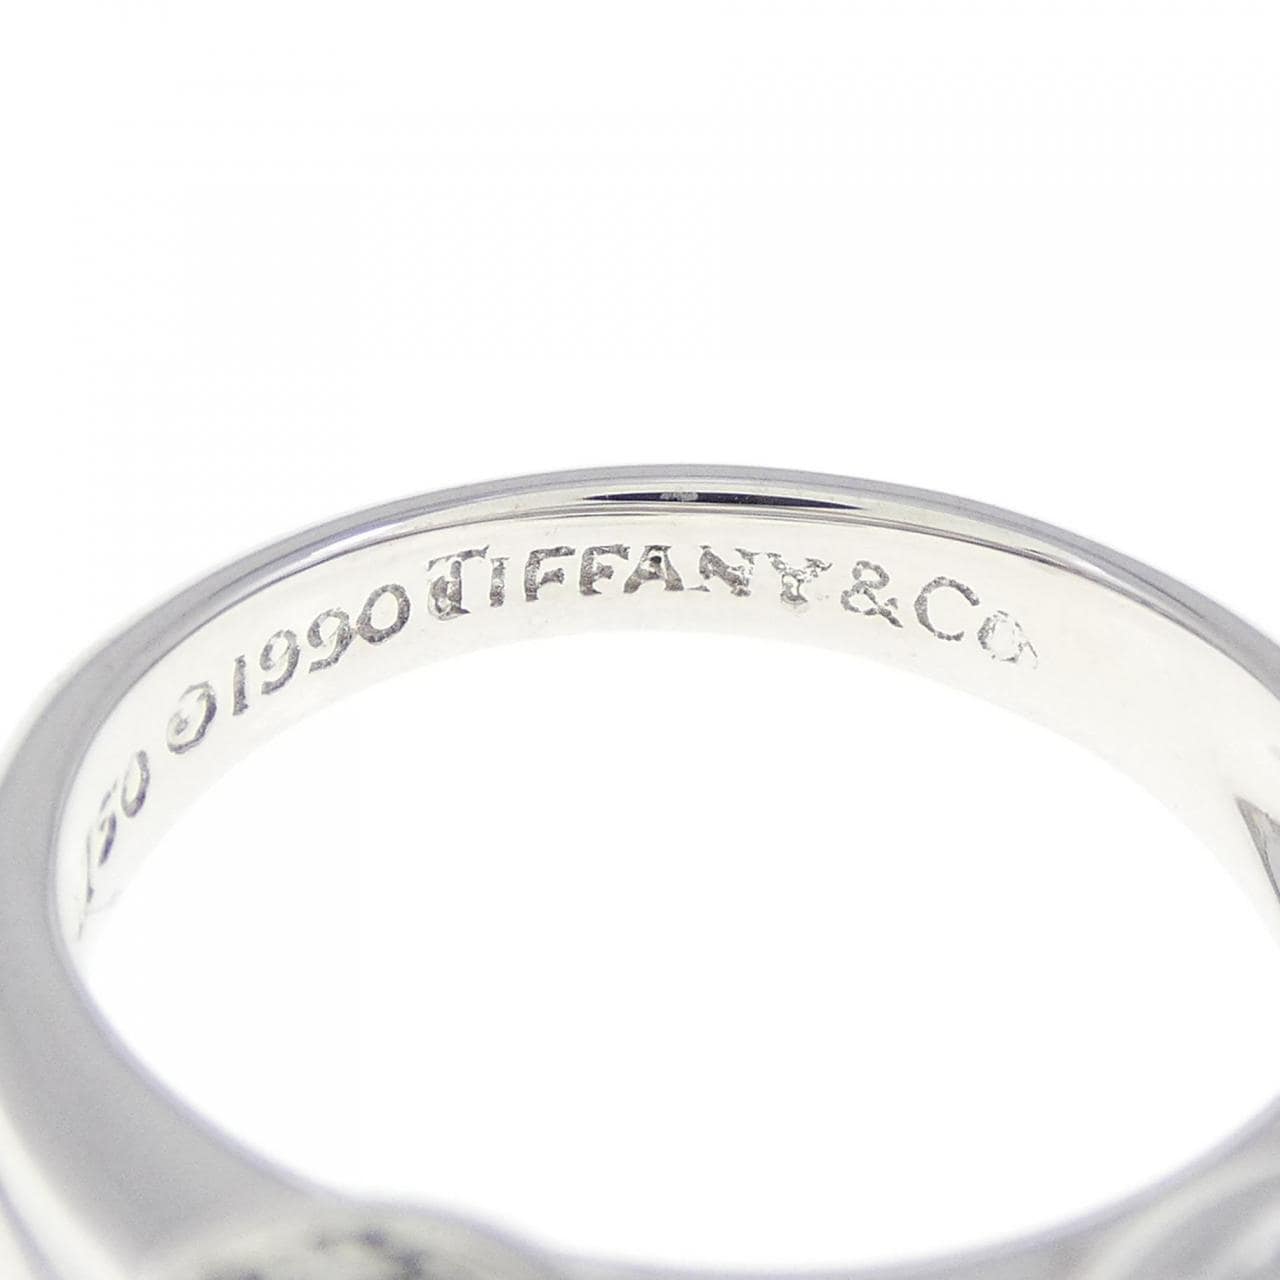 [vintage] TIFFANY签名戒指